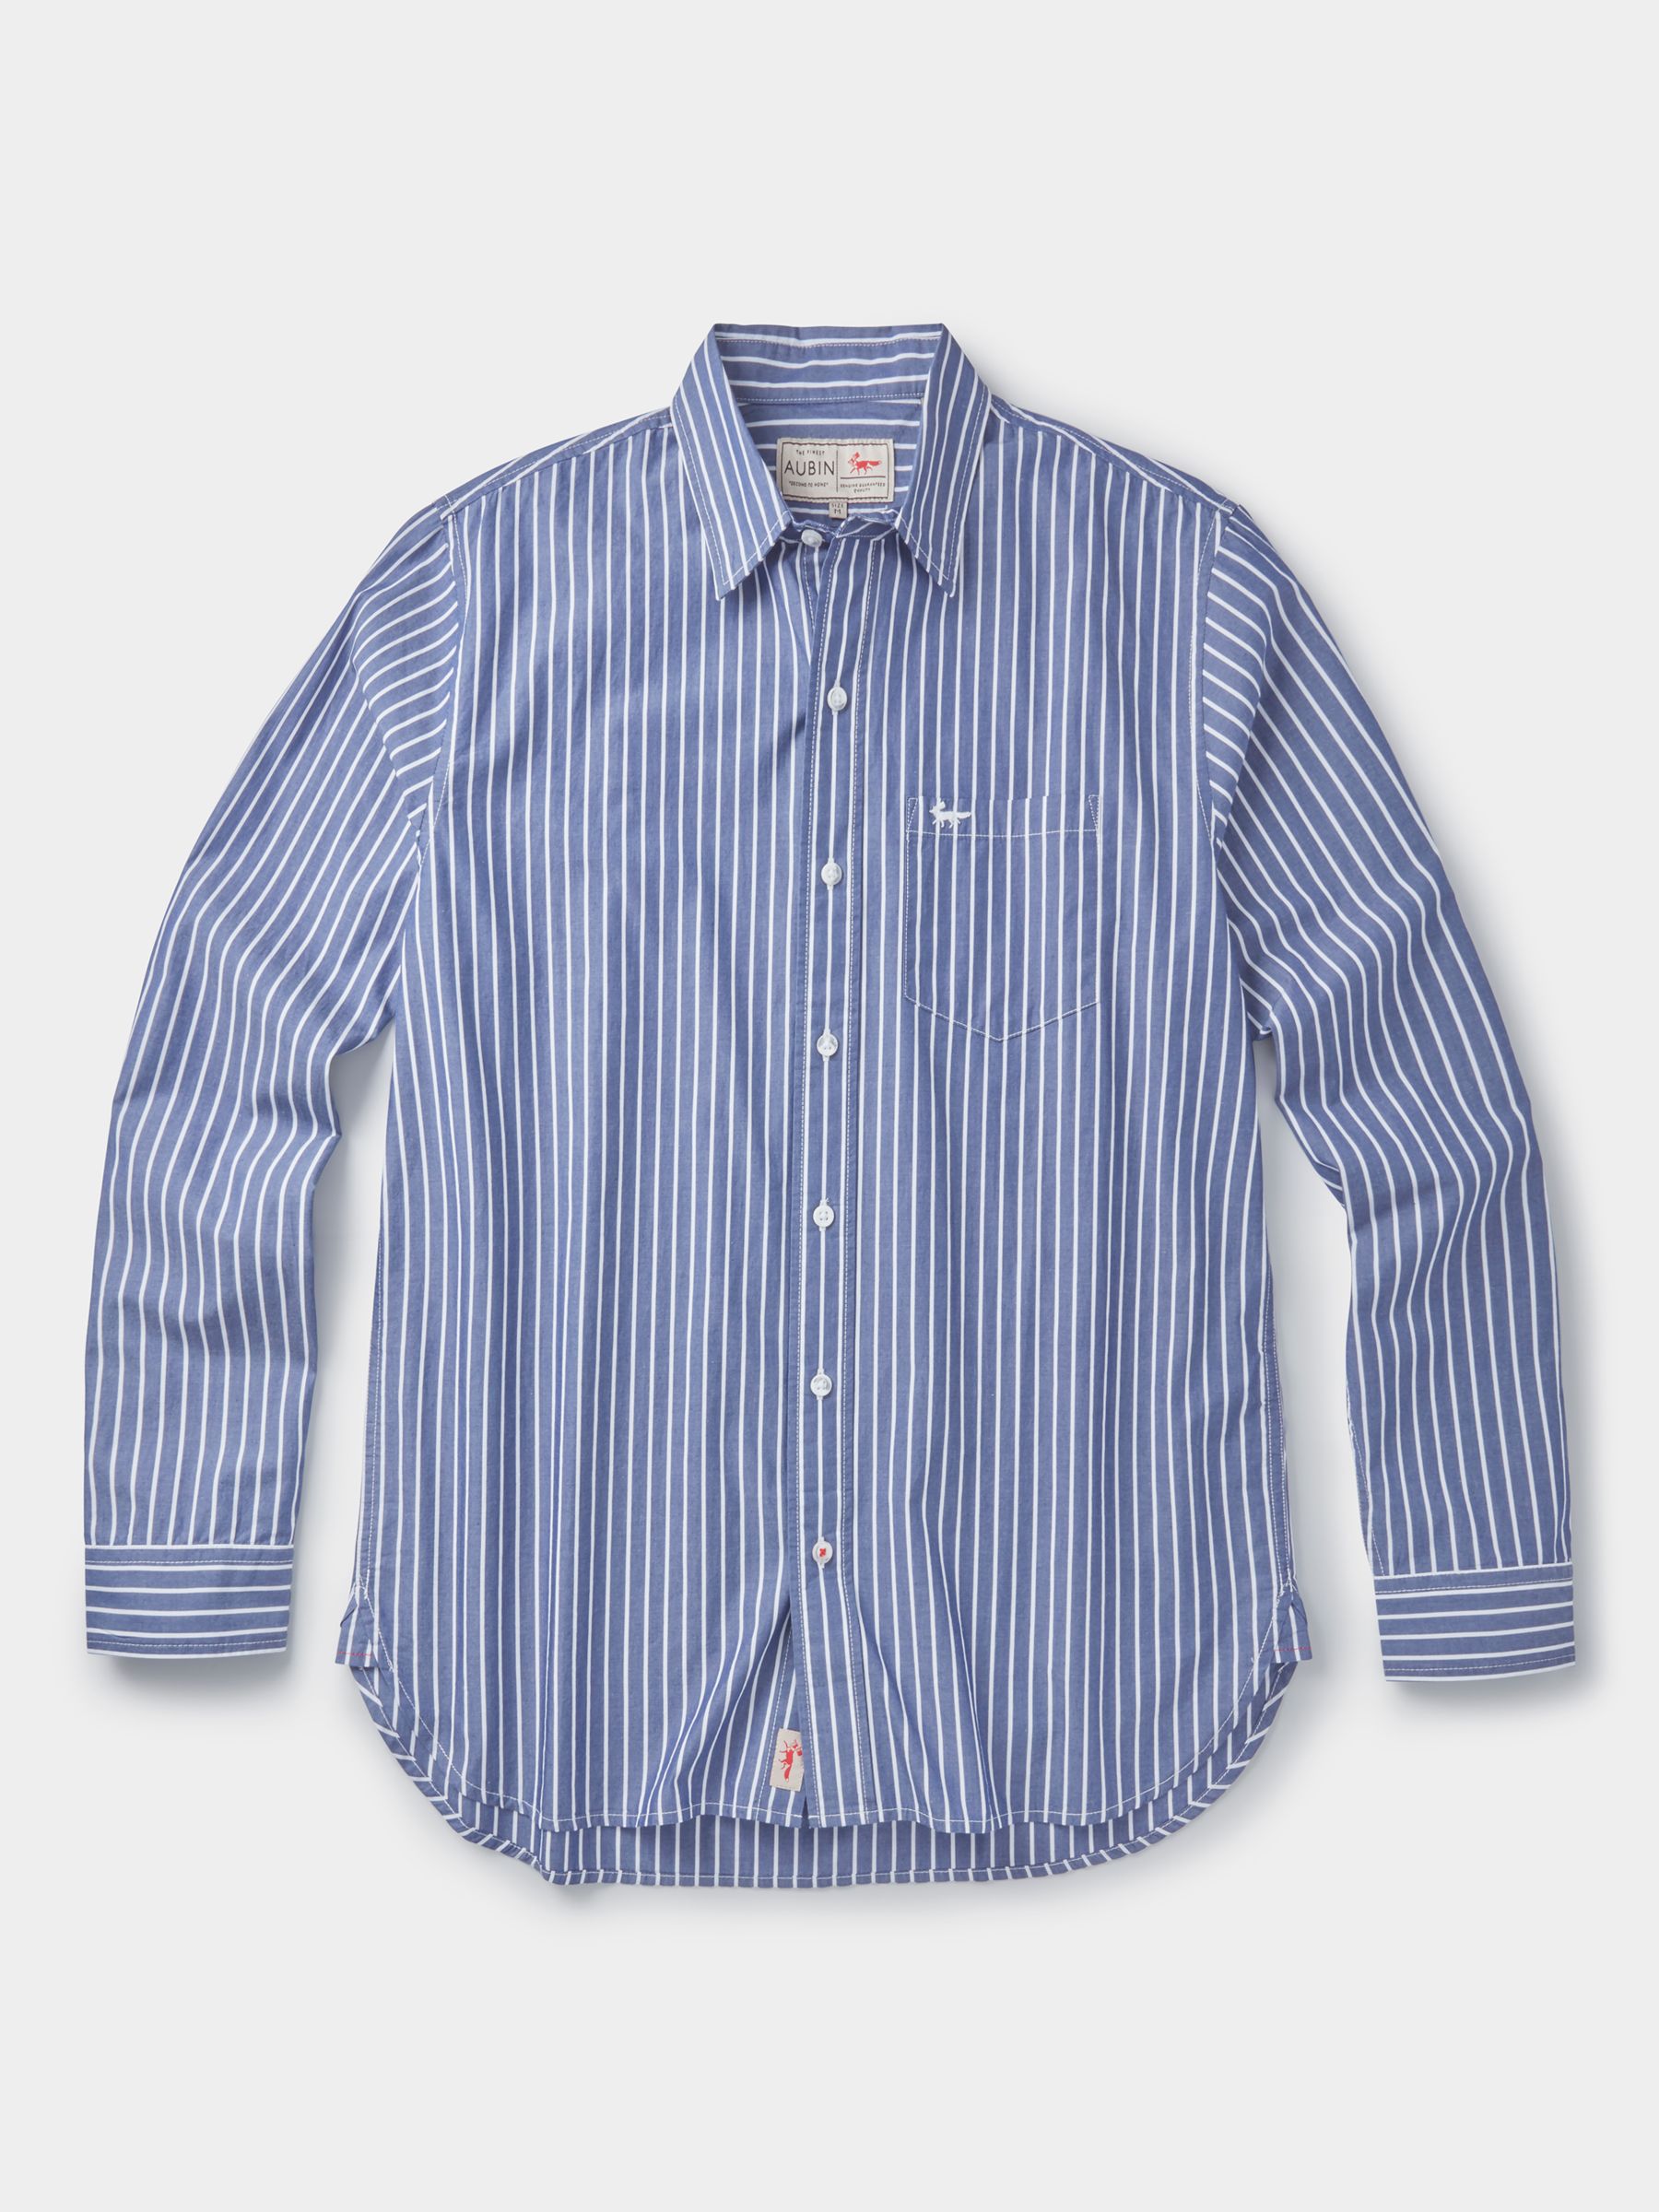 Aubin Gladstone Poplin Shirt, Blue/White at John Lewis & Partners